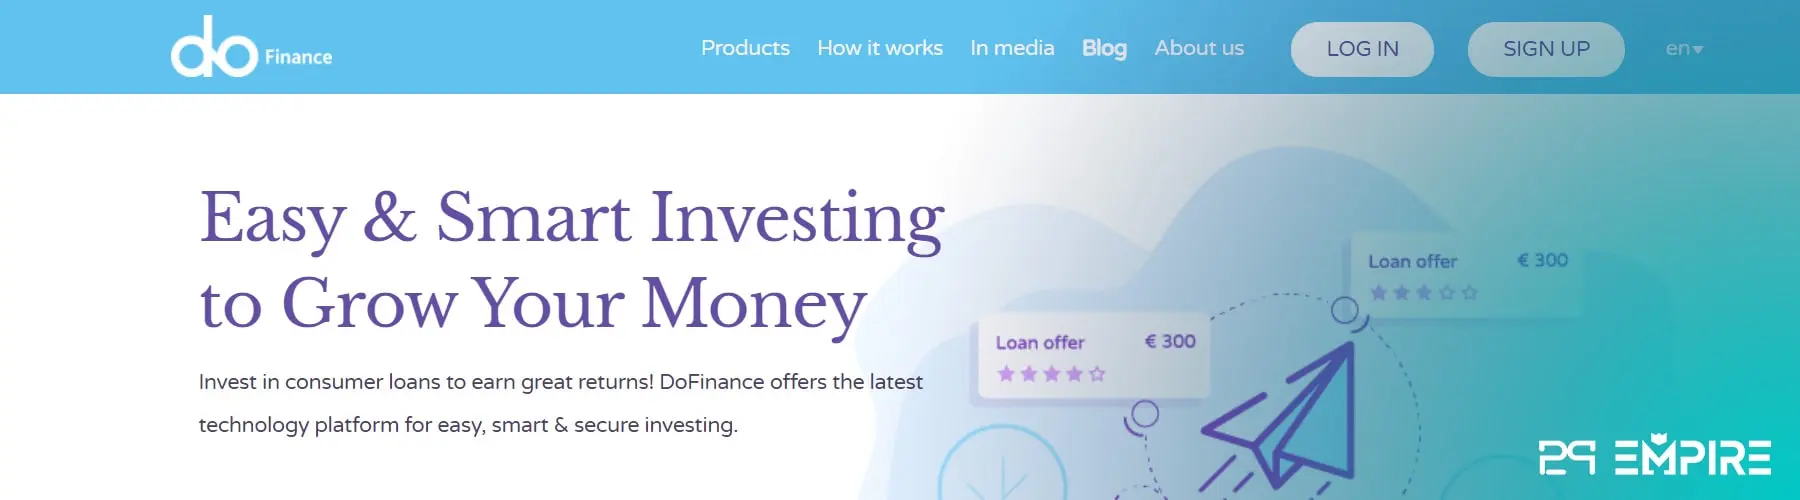 dofinance review